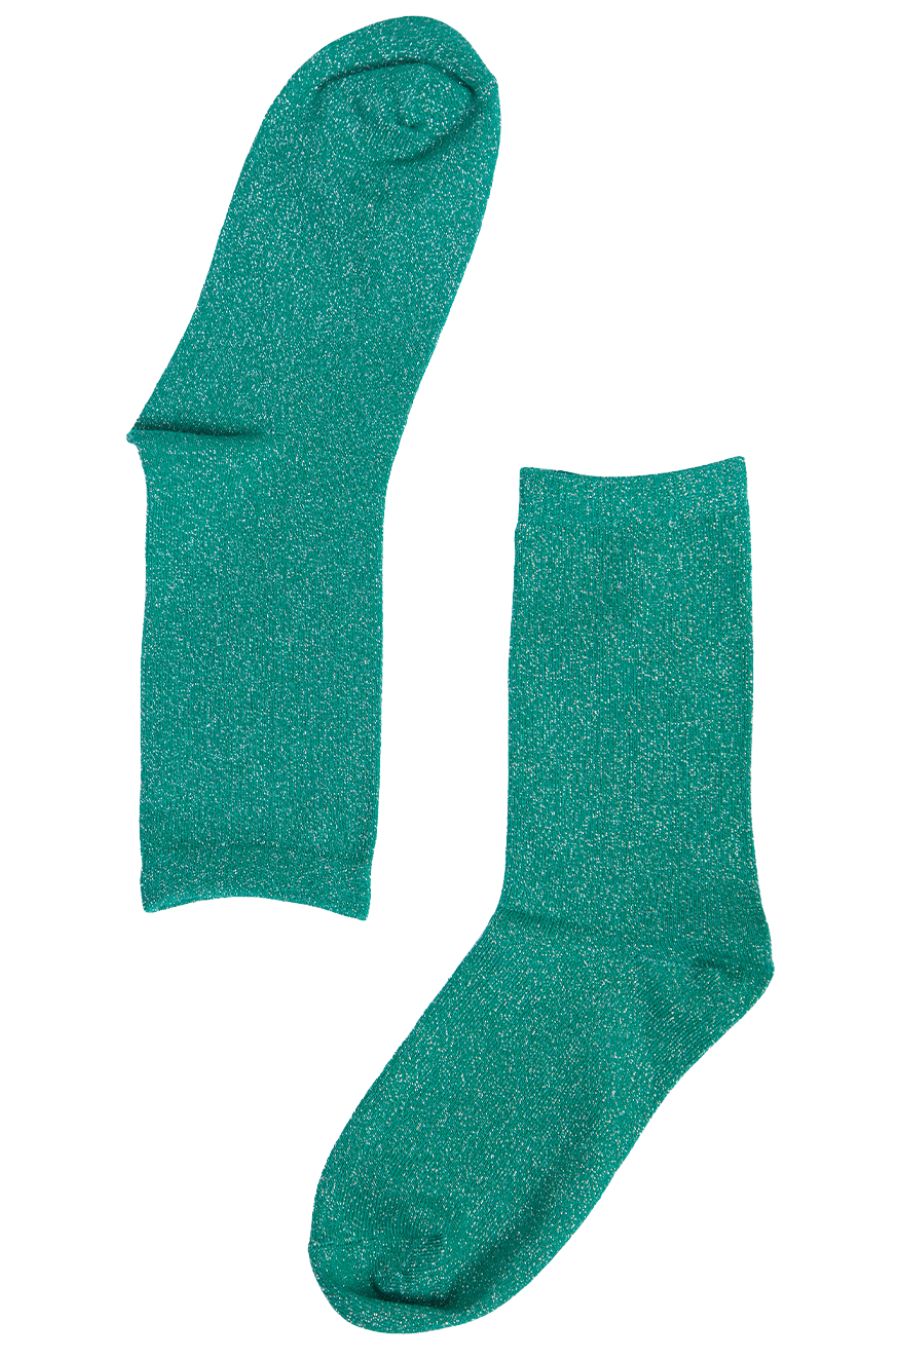 women's green and silver glitter socks